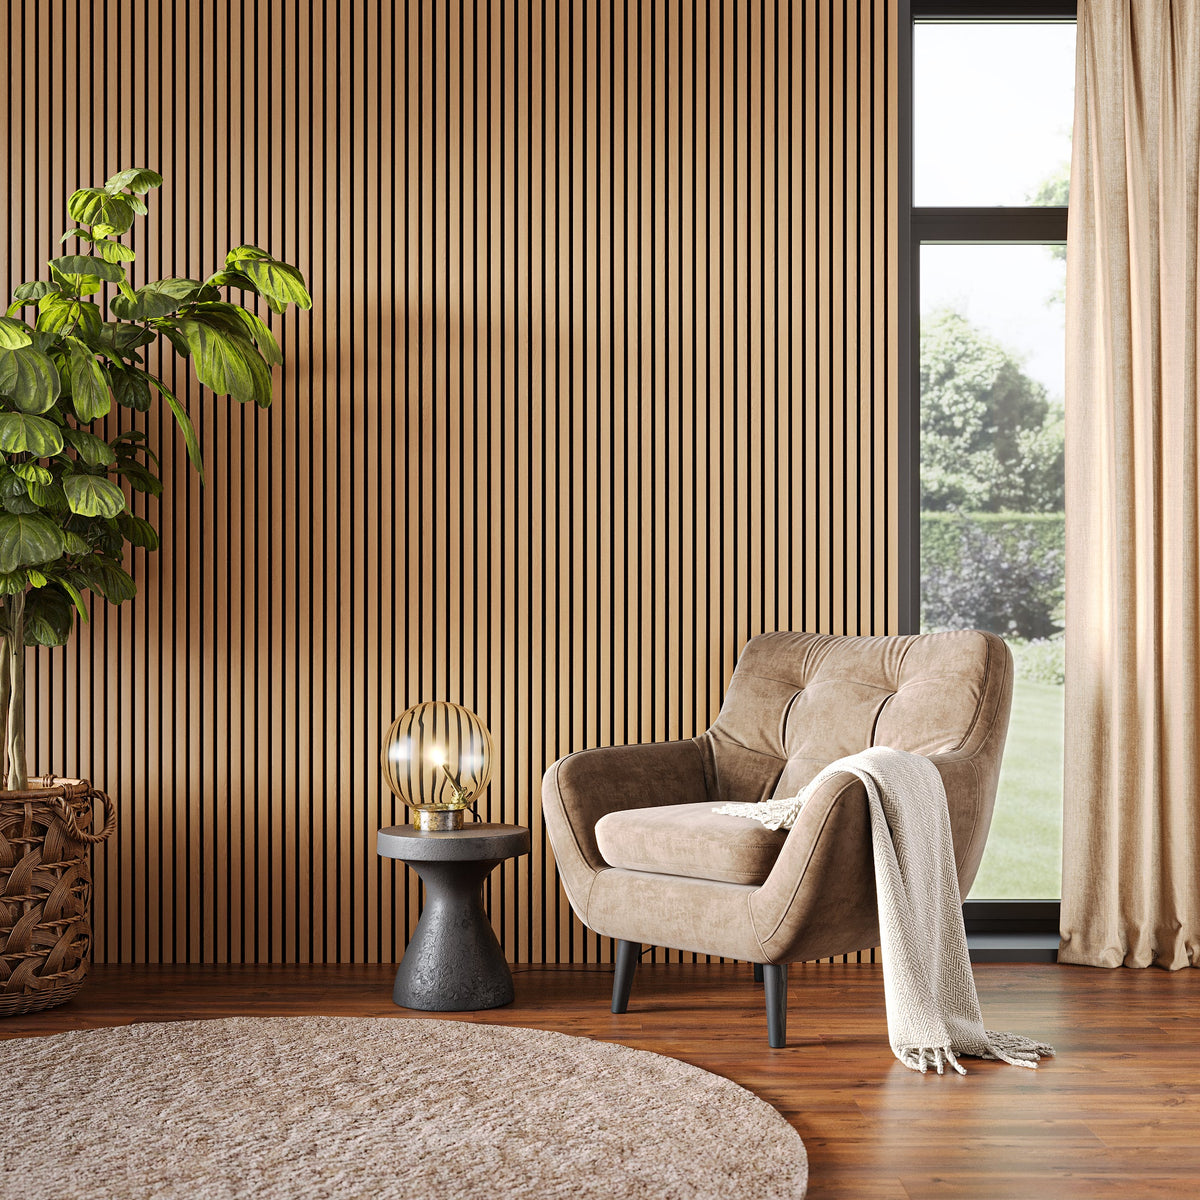 A Harmony of Design and Acoustics: Introducing The Acoustic Slat Wood Wall Panel Range - Bark & Bole